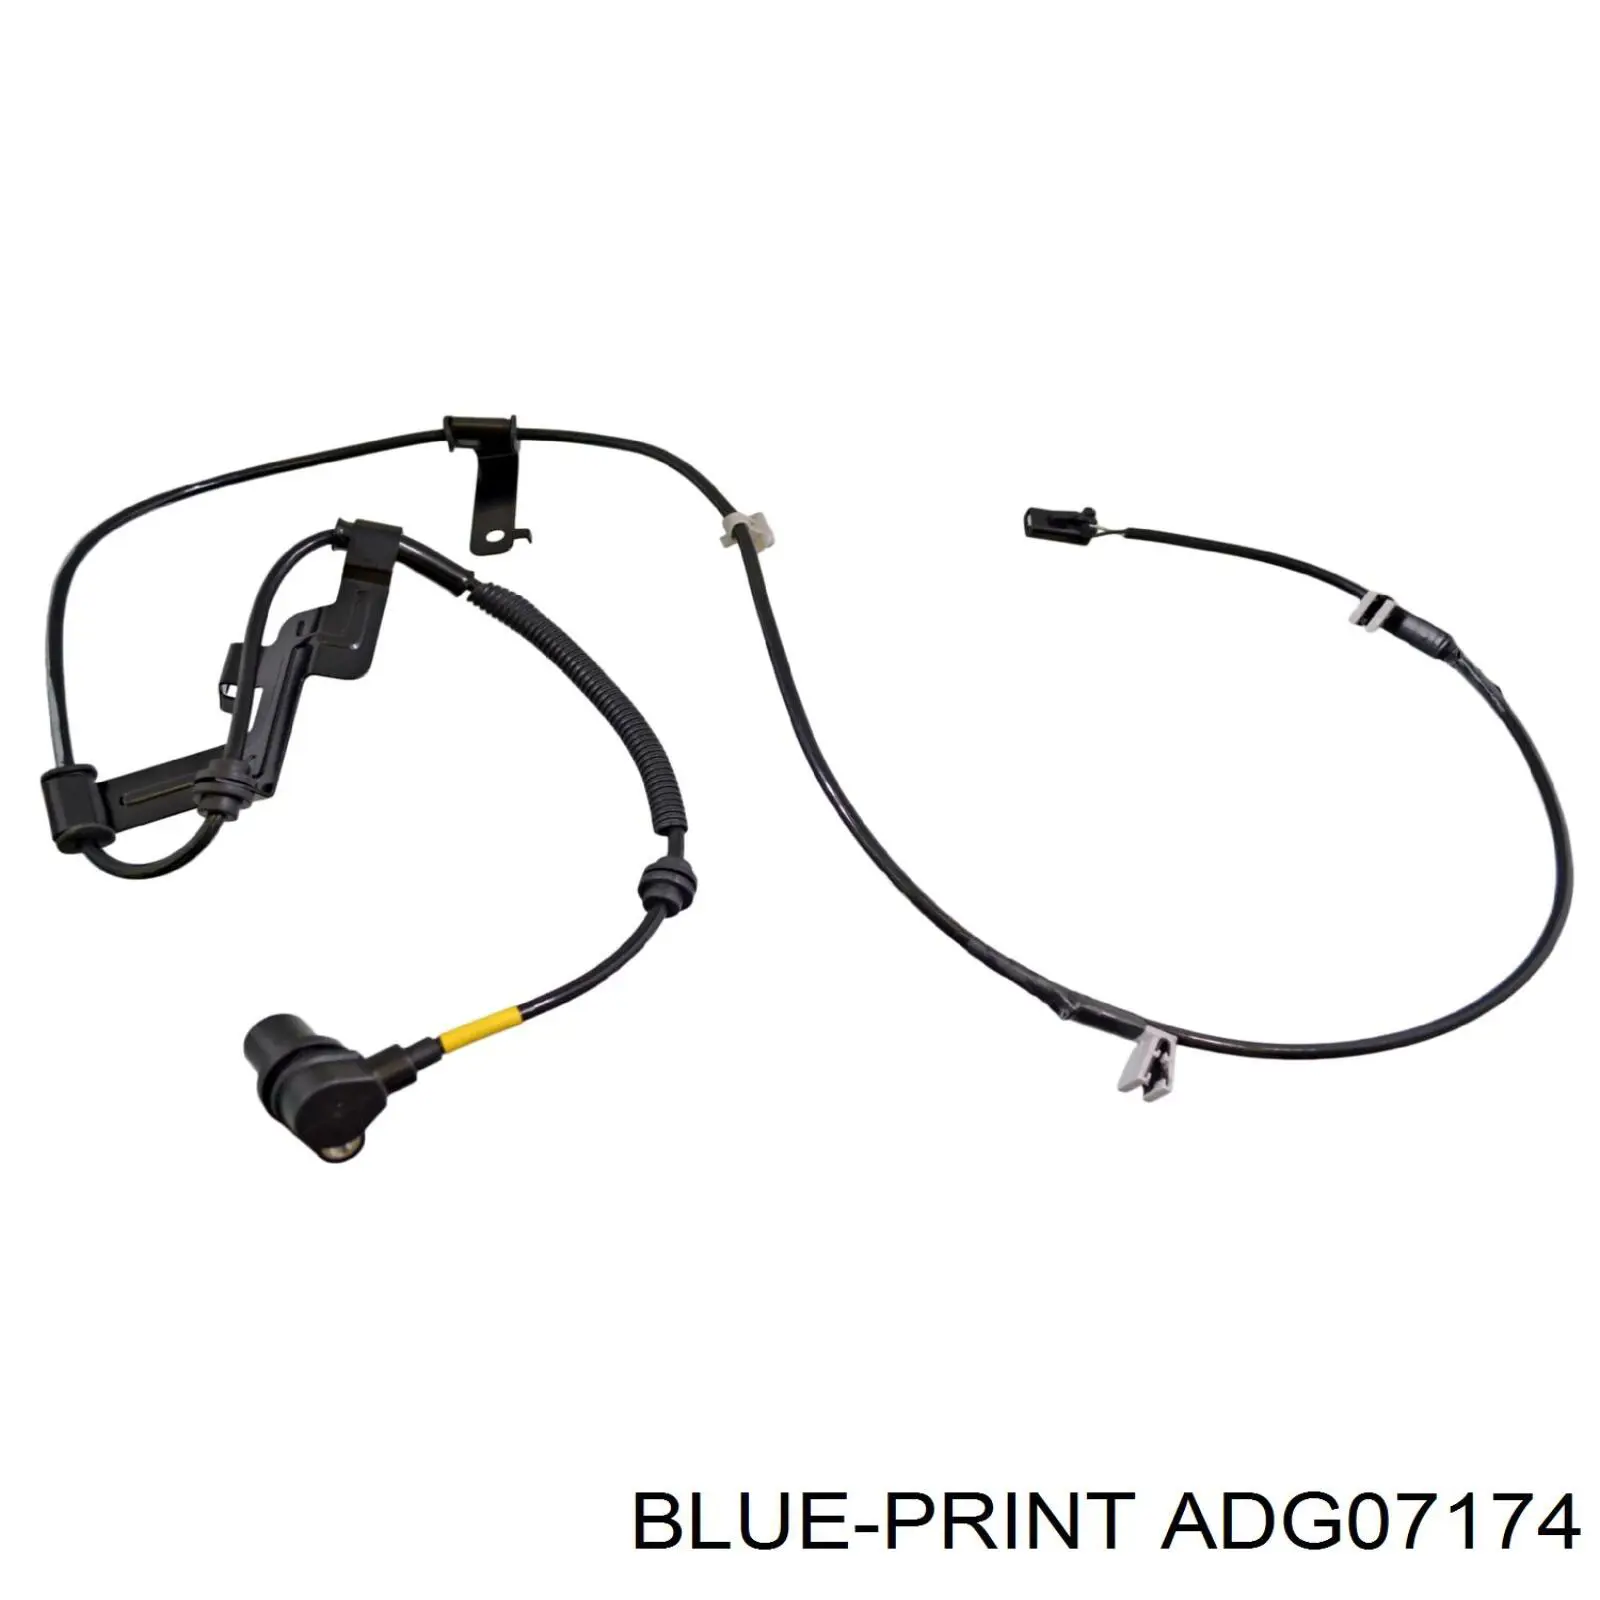 ADG07174 Blue Print датчик абс (abs передний левый)